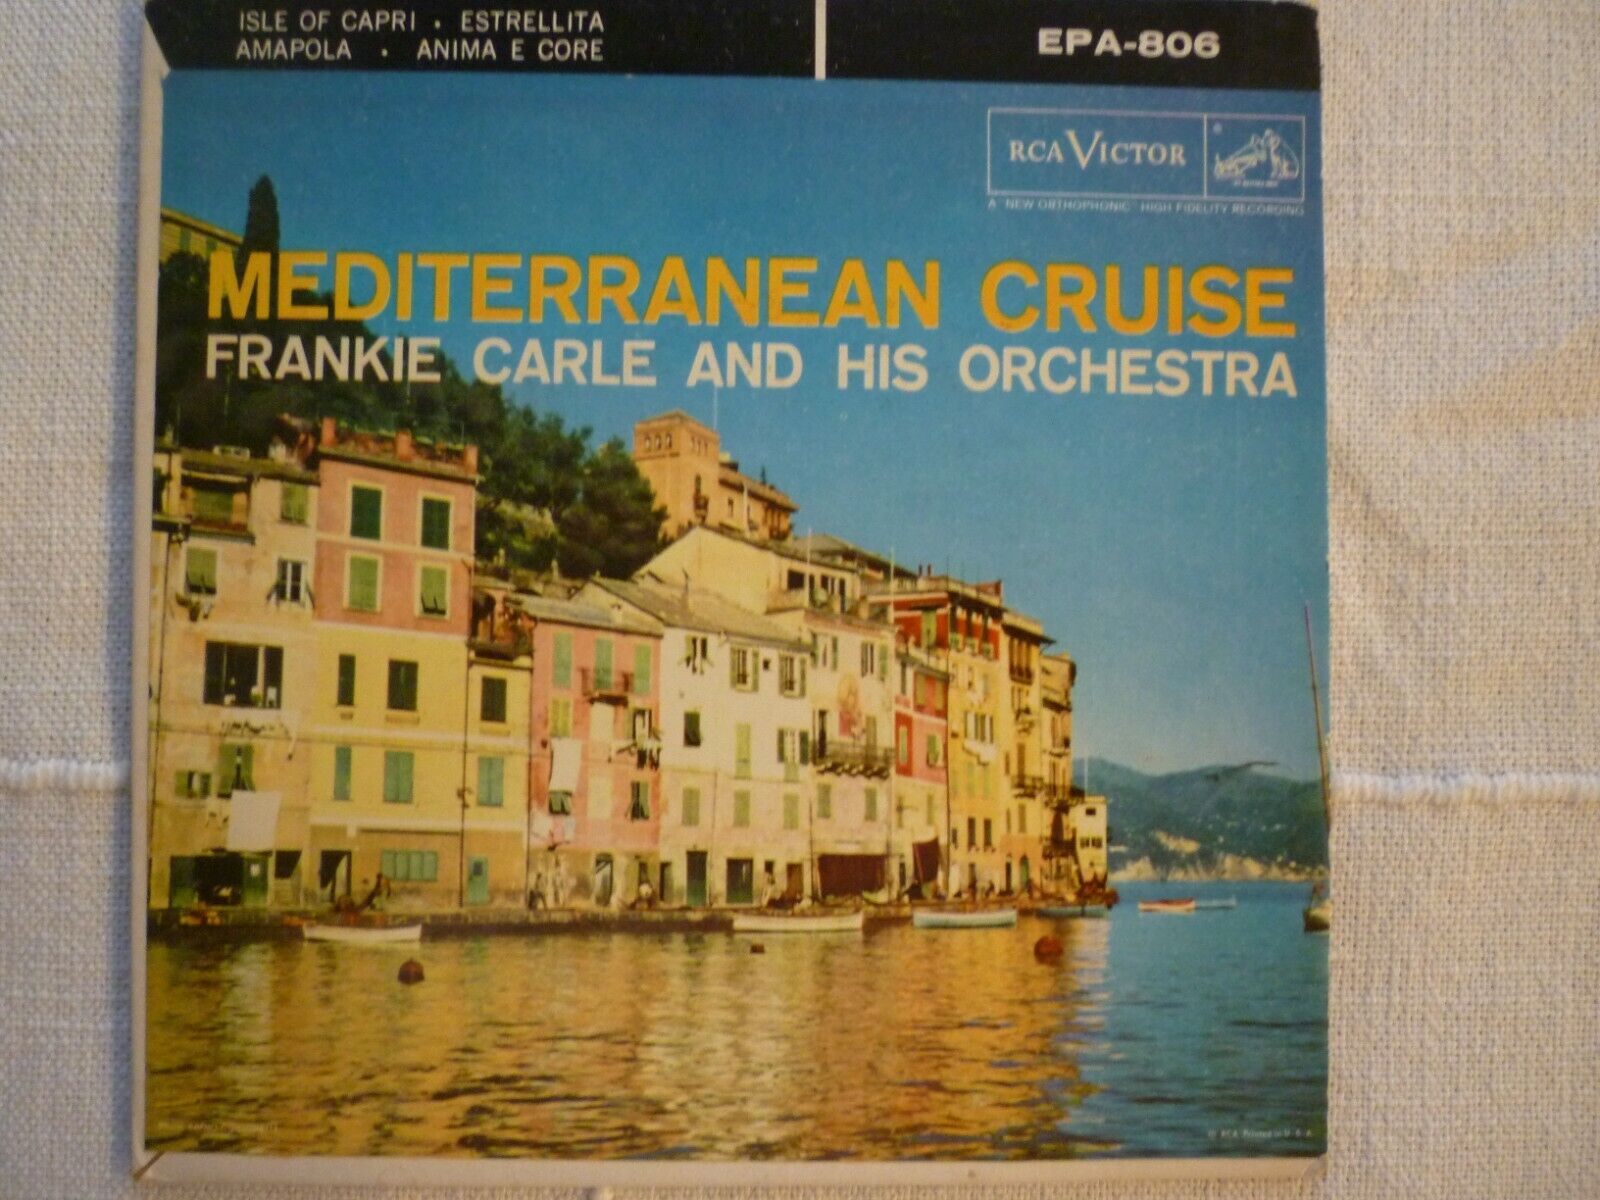 Frankie Carle & His Orchestra - Mediterranean Cruise 4 Song EP RCA Victor EPA806